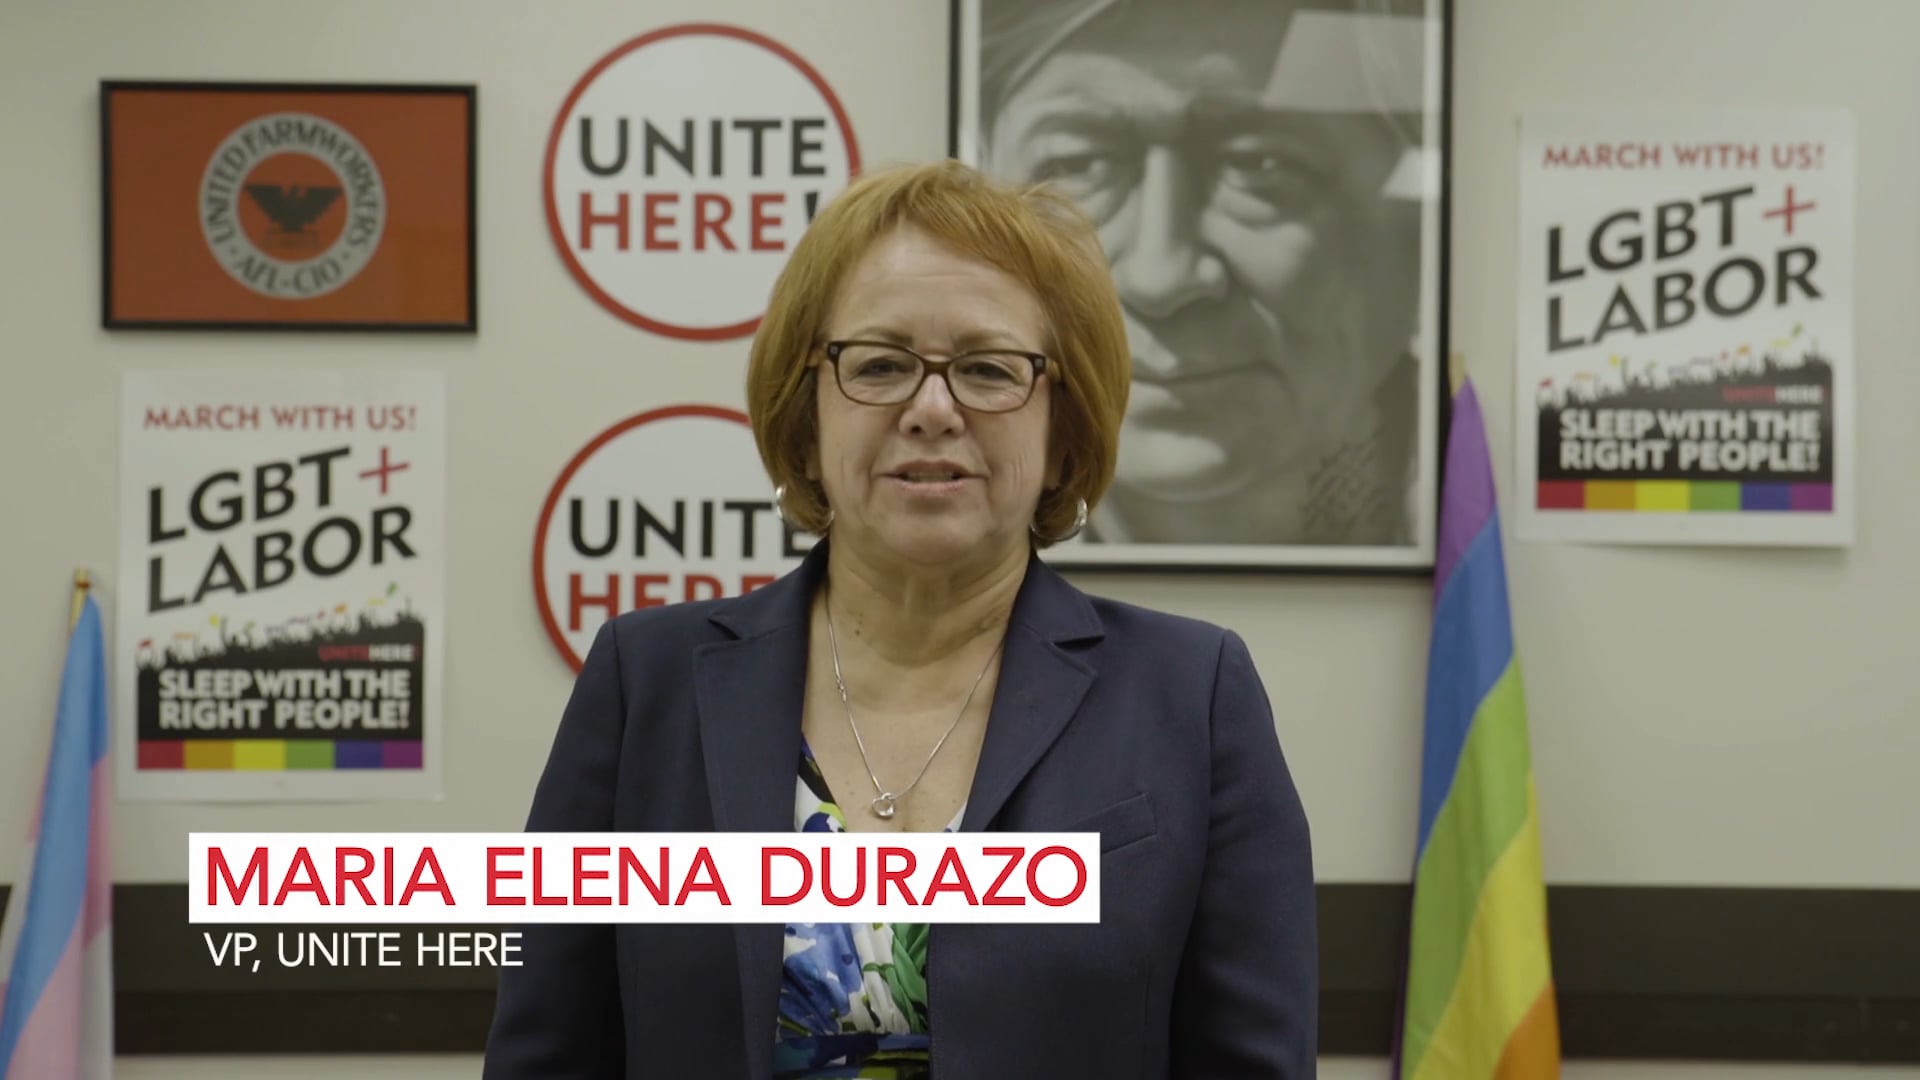 MARIA ELENA DURAZO - UNITE HERE